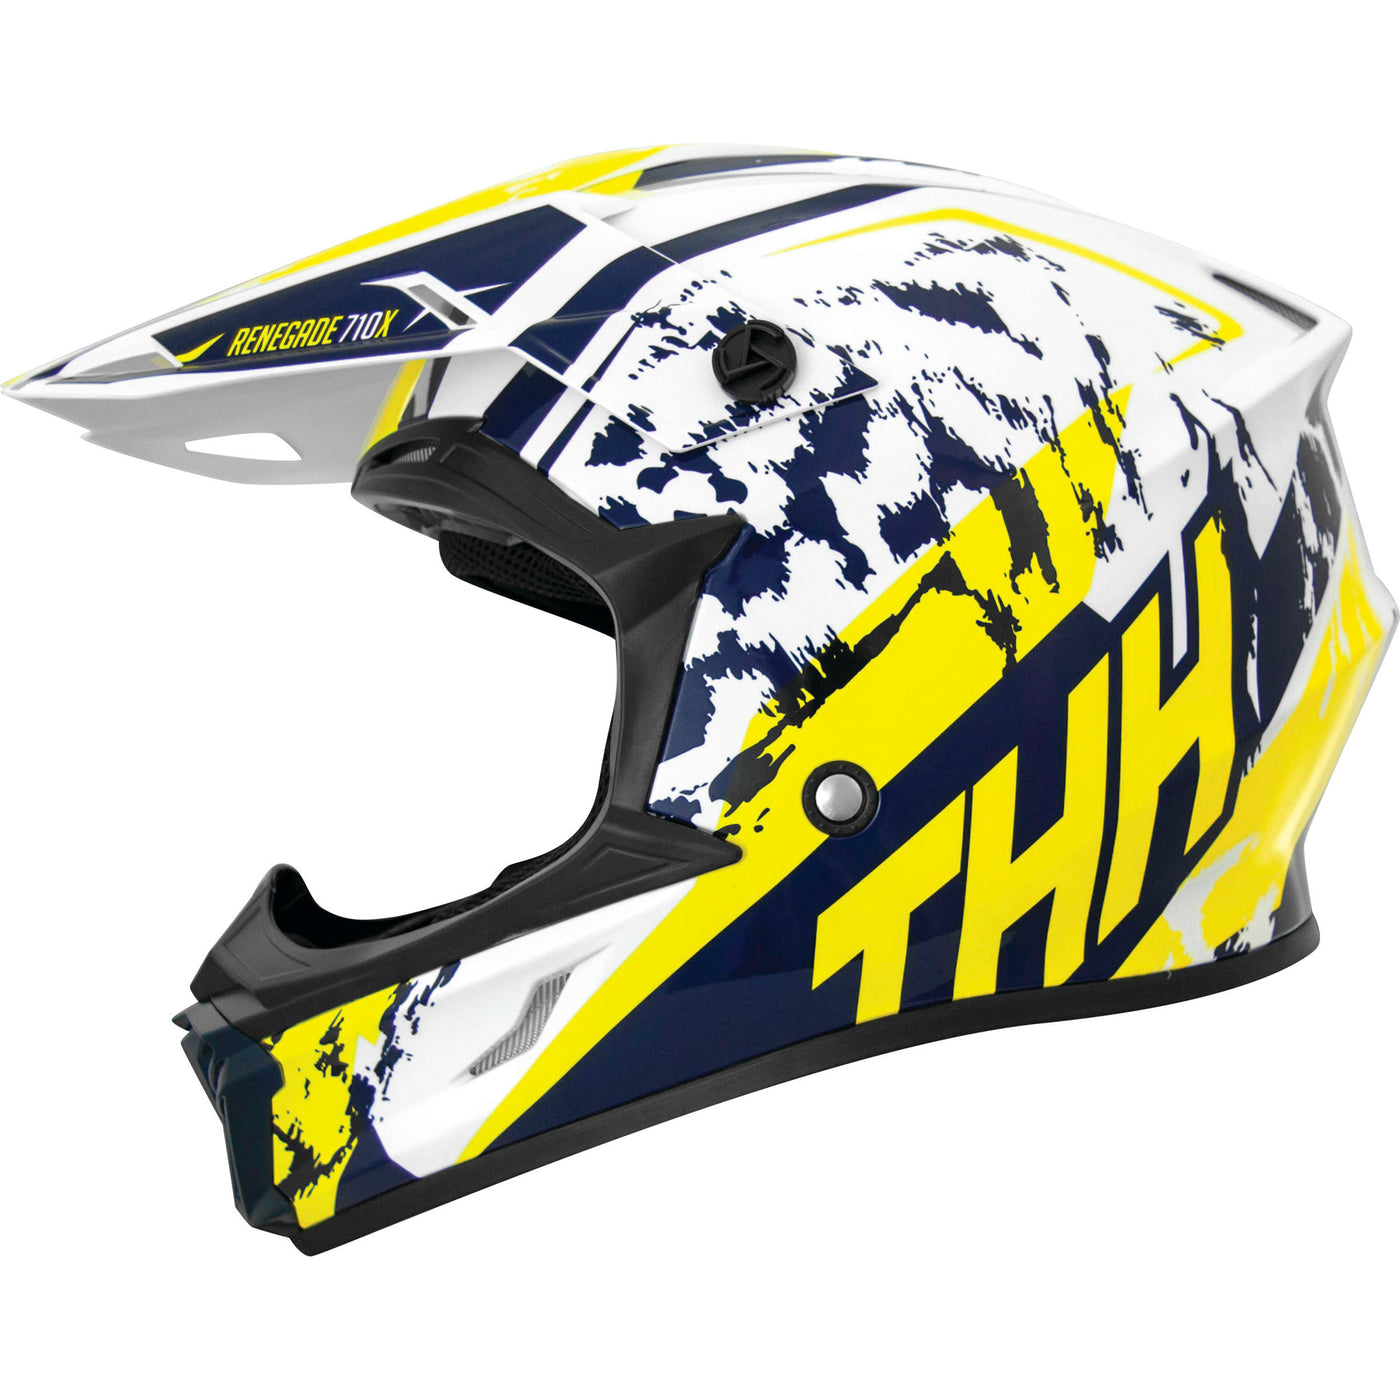 Thh T710X Renegade Helmet